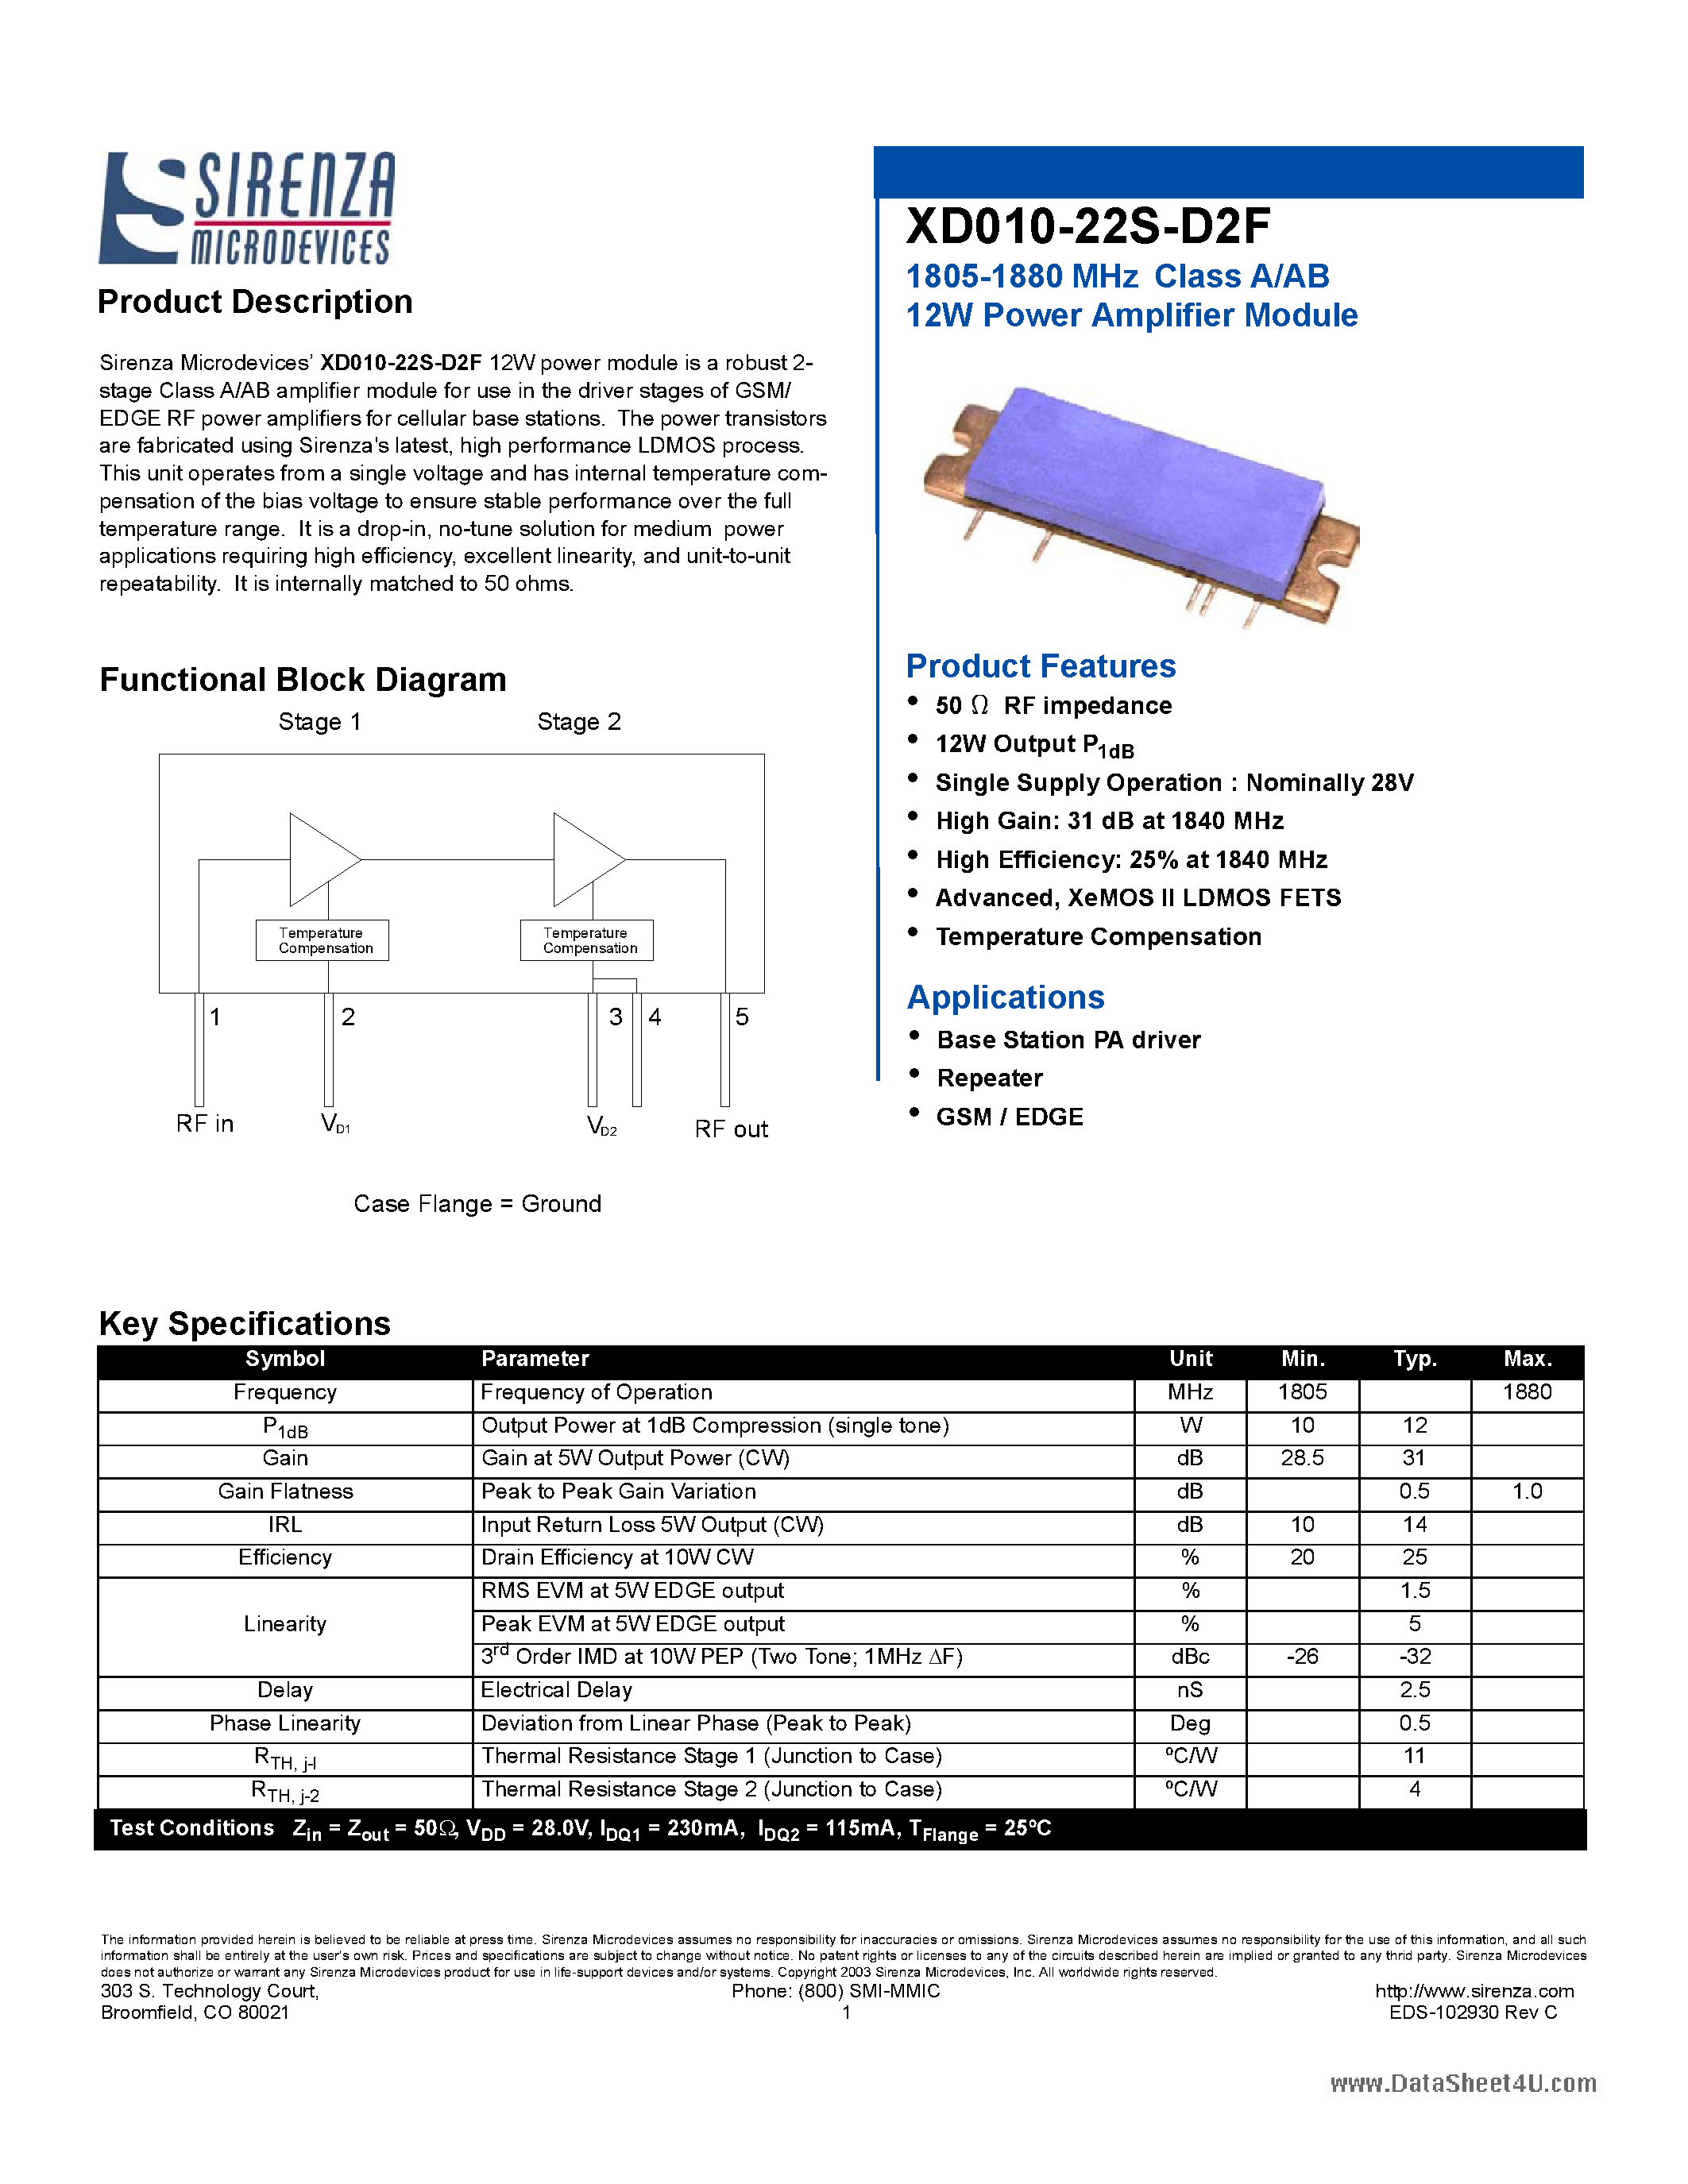 Даташит XD010-22S-D2F - Class A/AB 12W Power Amplifier Module страница 1